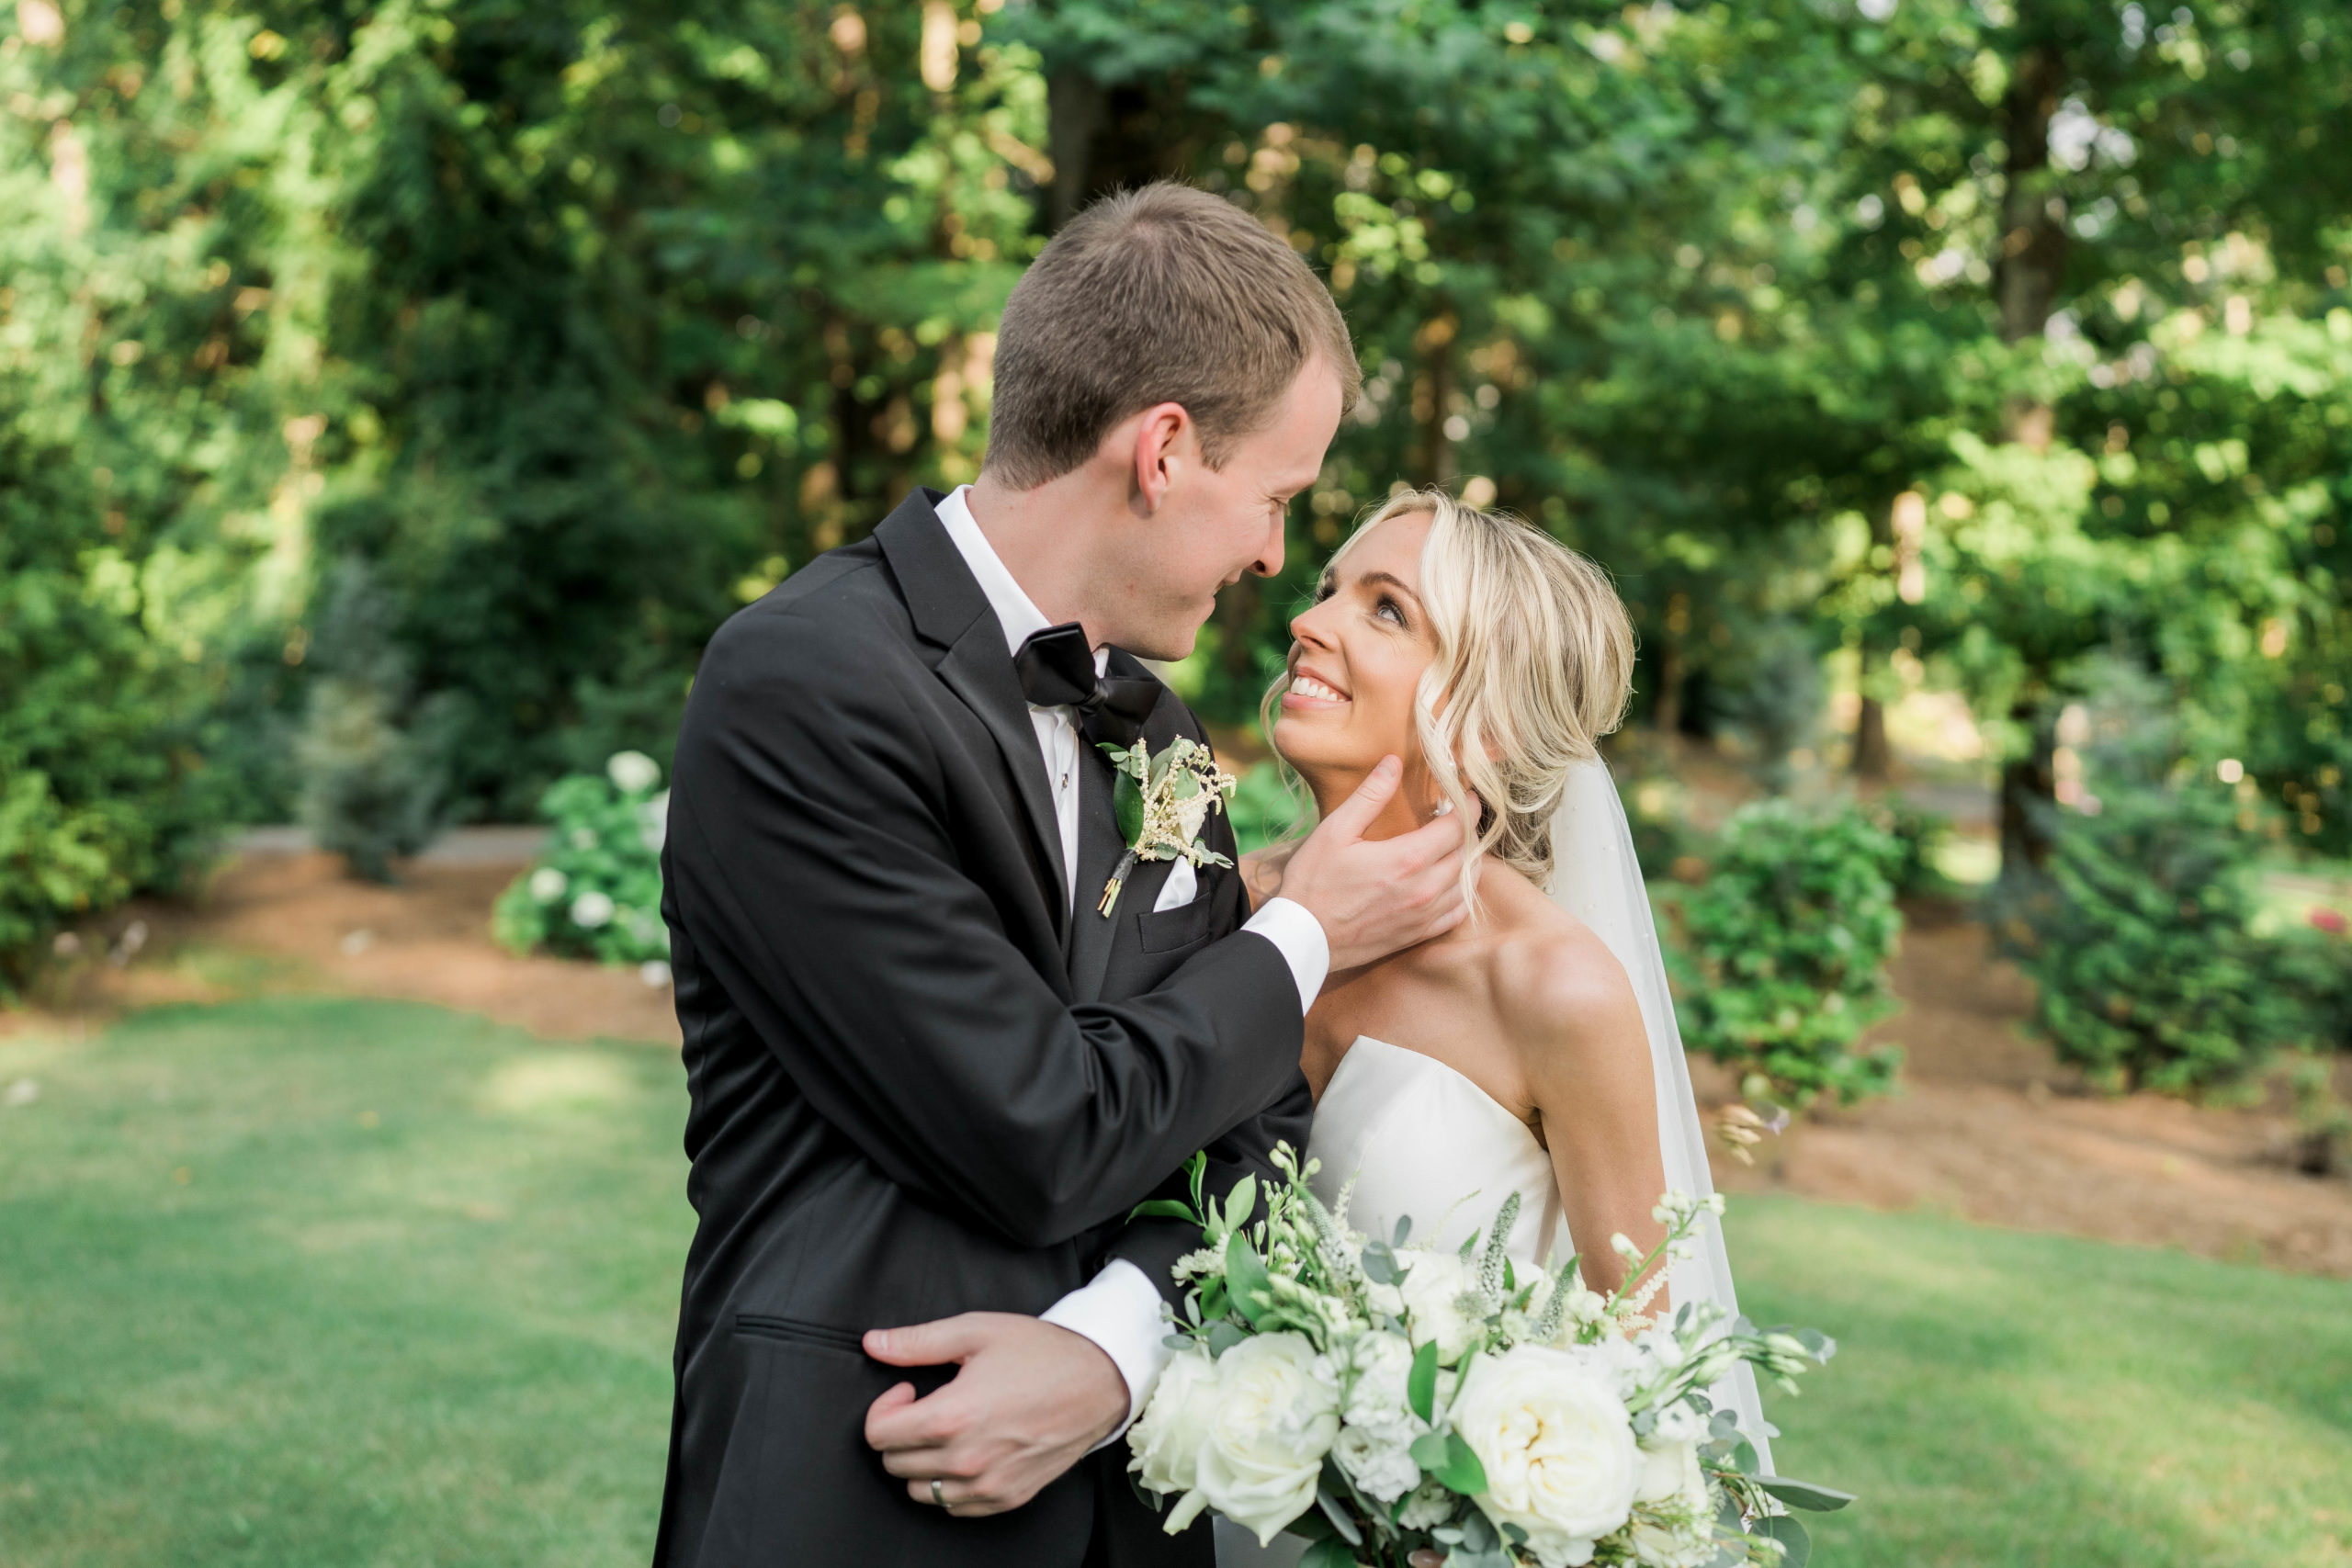 Christina Bingham Photography captures couple on their wedding day.